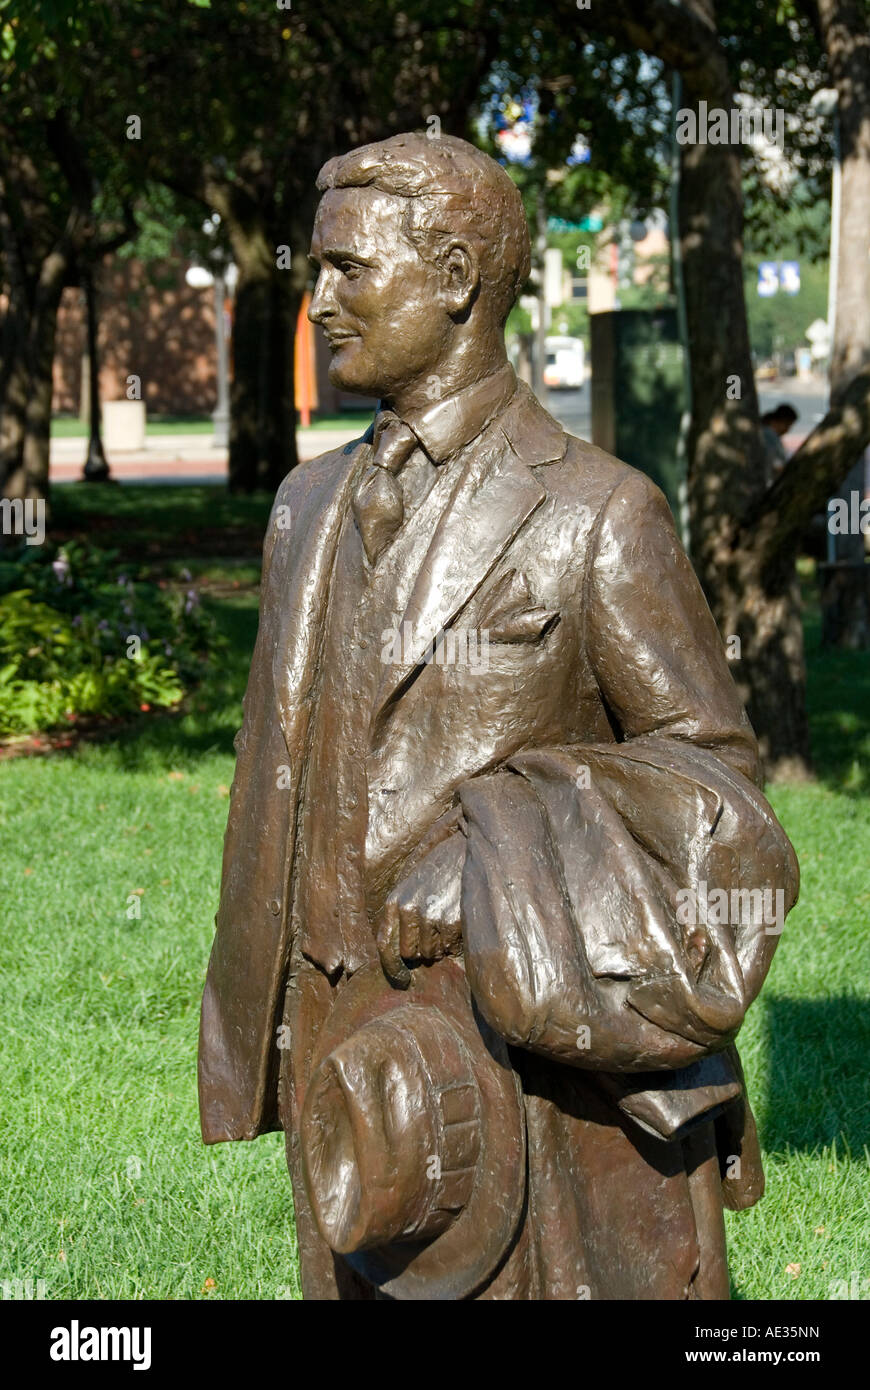 Minnesota Twin Cities Minneapolis Saint Paul F Scott Fitzgerald author statue in Rice Park in St Paul Stock Photo